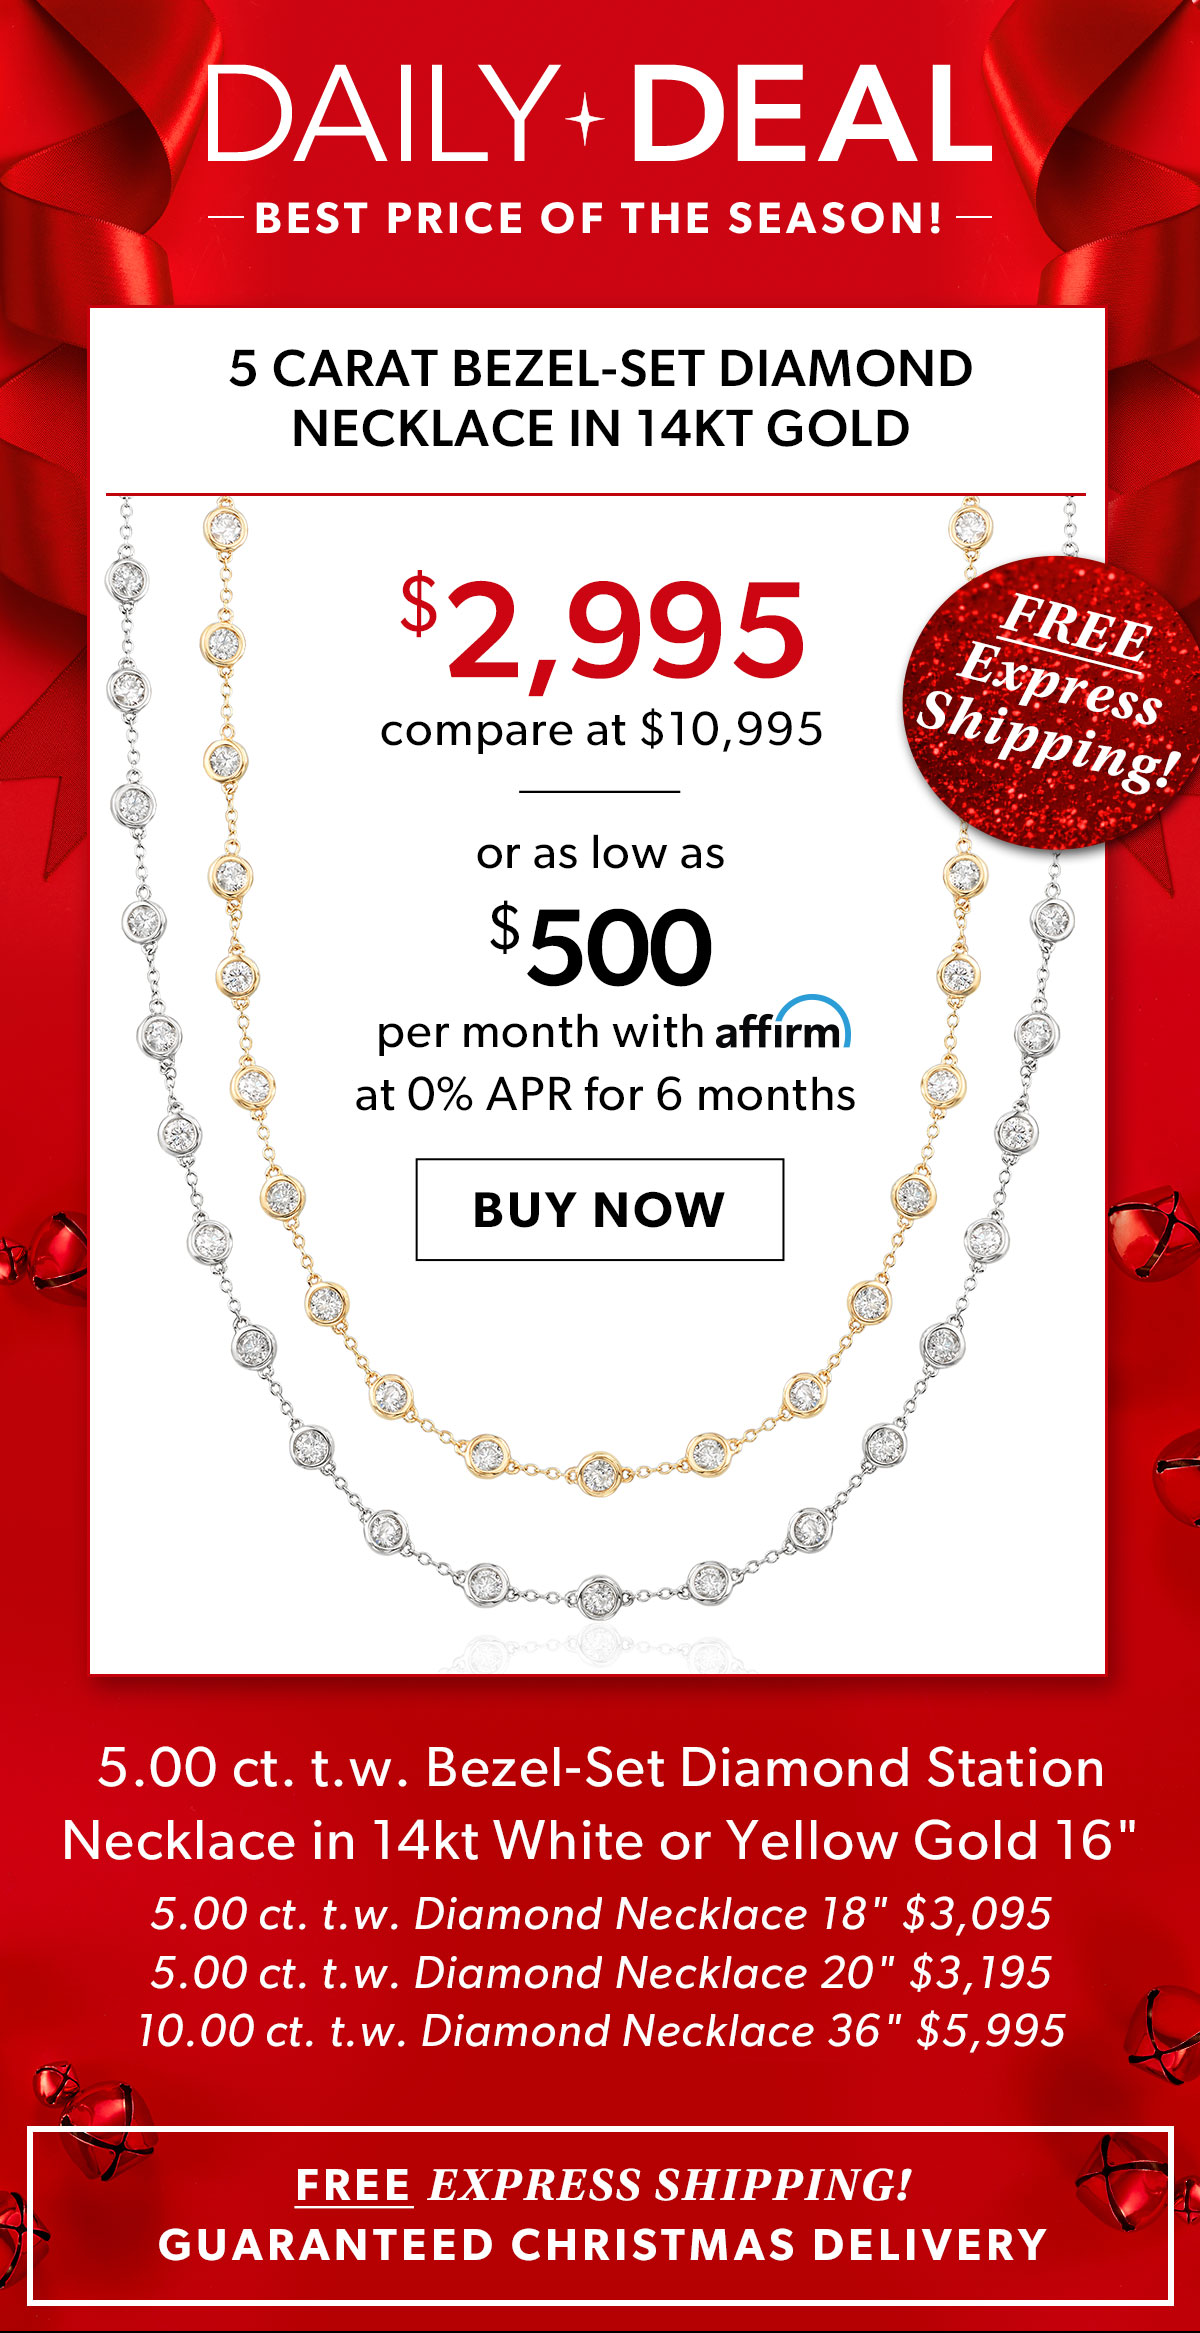 5 Carat Bezel-Set Diamond Necklace in 14kt Gold. $2,995. Buy Now